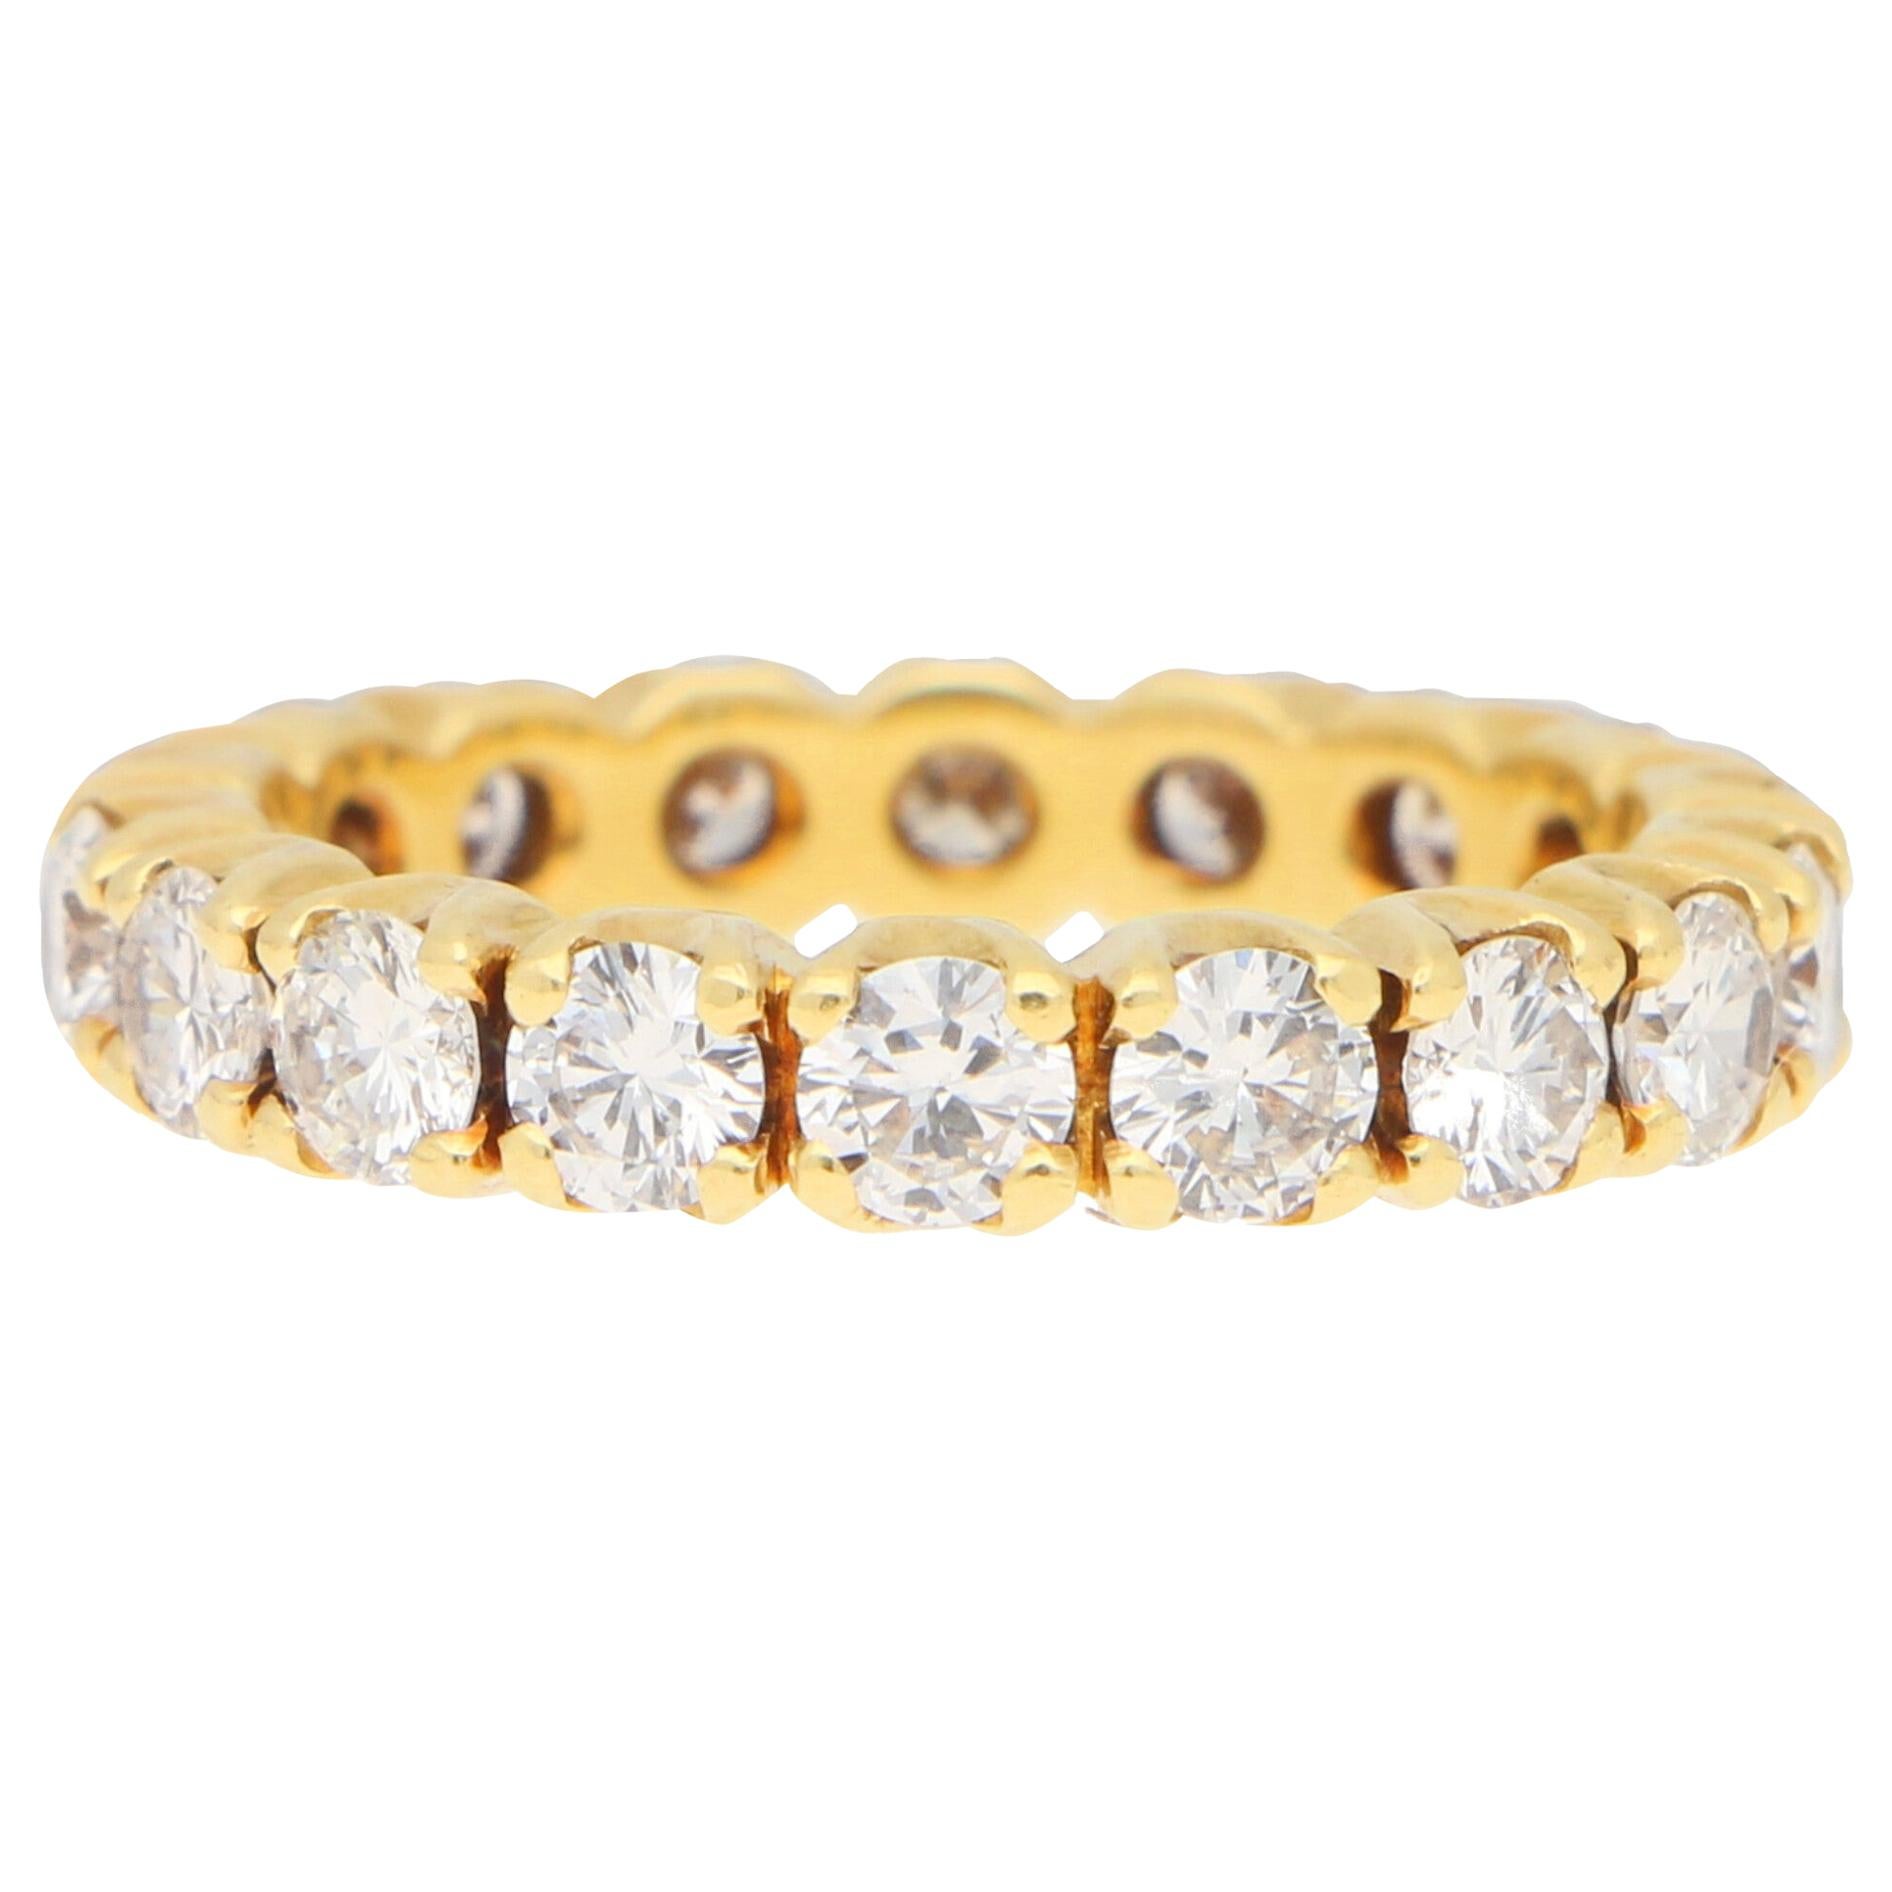 2.70 Carat Round Brilliant Diamond Full Eternity Ring in 18 Karat Yellow Gold